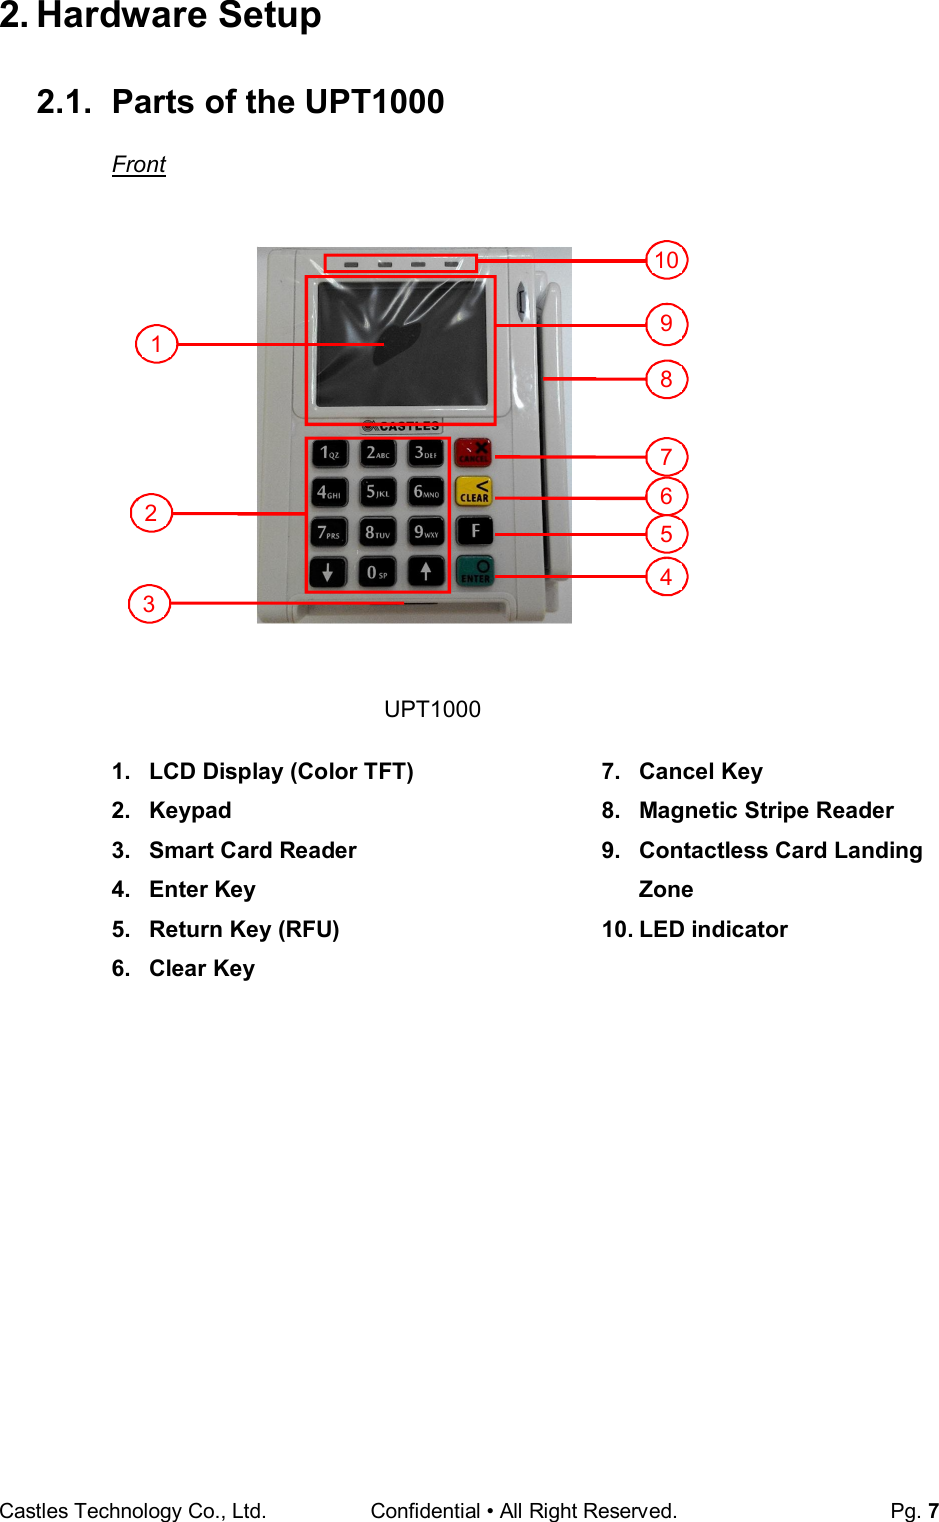 Castles Technology Co., Ltd. Confidential • All Right Reserved.  Pg. 7 2. Hardware Setup  2.1.  Parts of the UPT1000 Front                               1.  LCD Display (Color TFT) 2.  Keypad 3.  Smart Card Reader 4.  Enter Key 5.  Return Key (RFU) 6.  Clear Key 7.  Cancel Key 8.  Magnetic Stripe Reader 9.  Contactless Card Landing Zone 10. LED indicator      UPT1000 1 2 3 5 8 9 10 6 7 4 